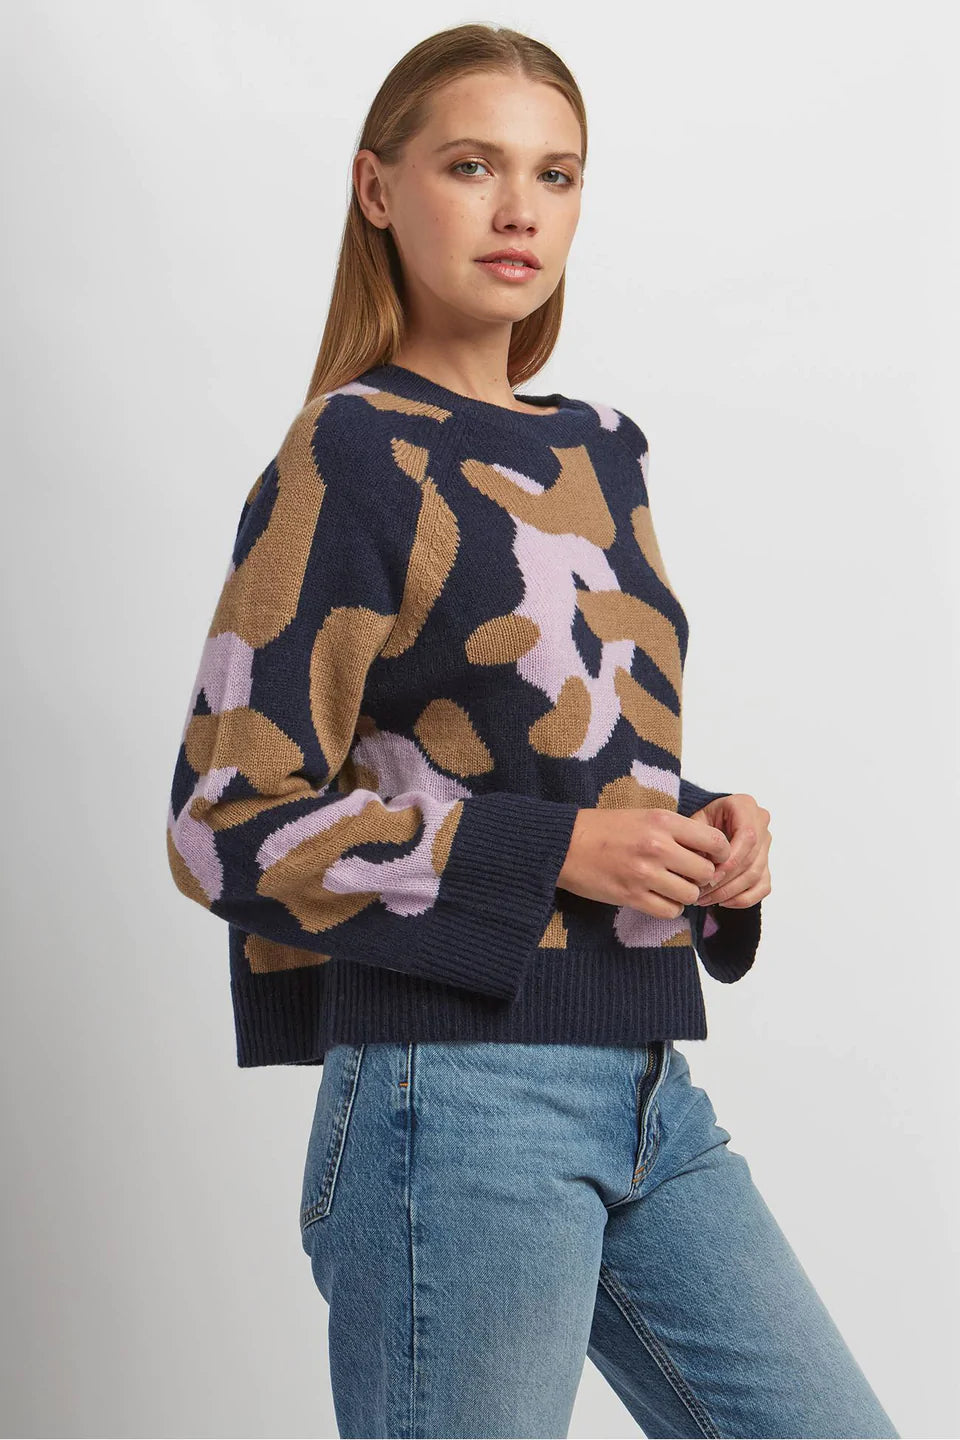 Odilla Sweater in Salted Caramel/Lavender Multi